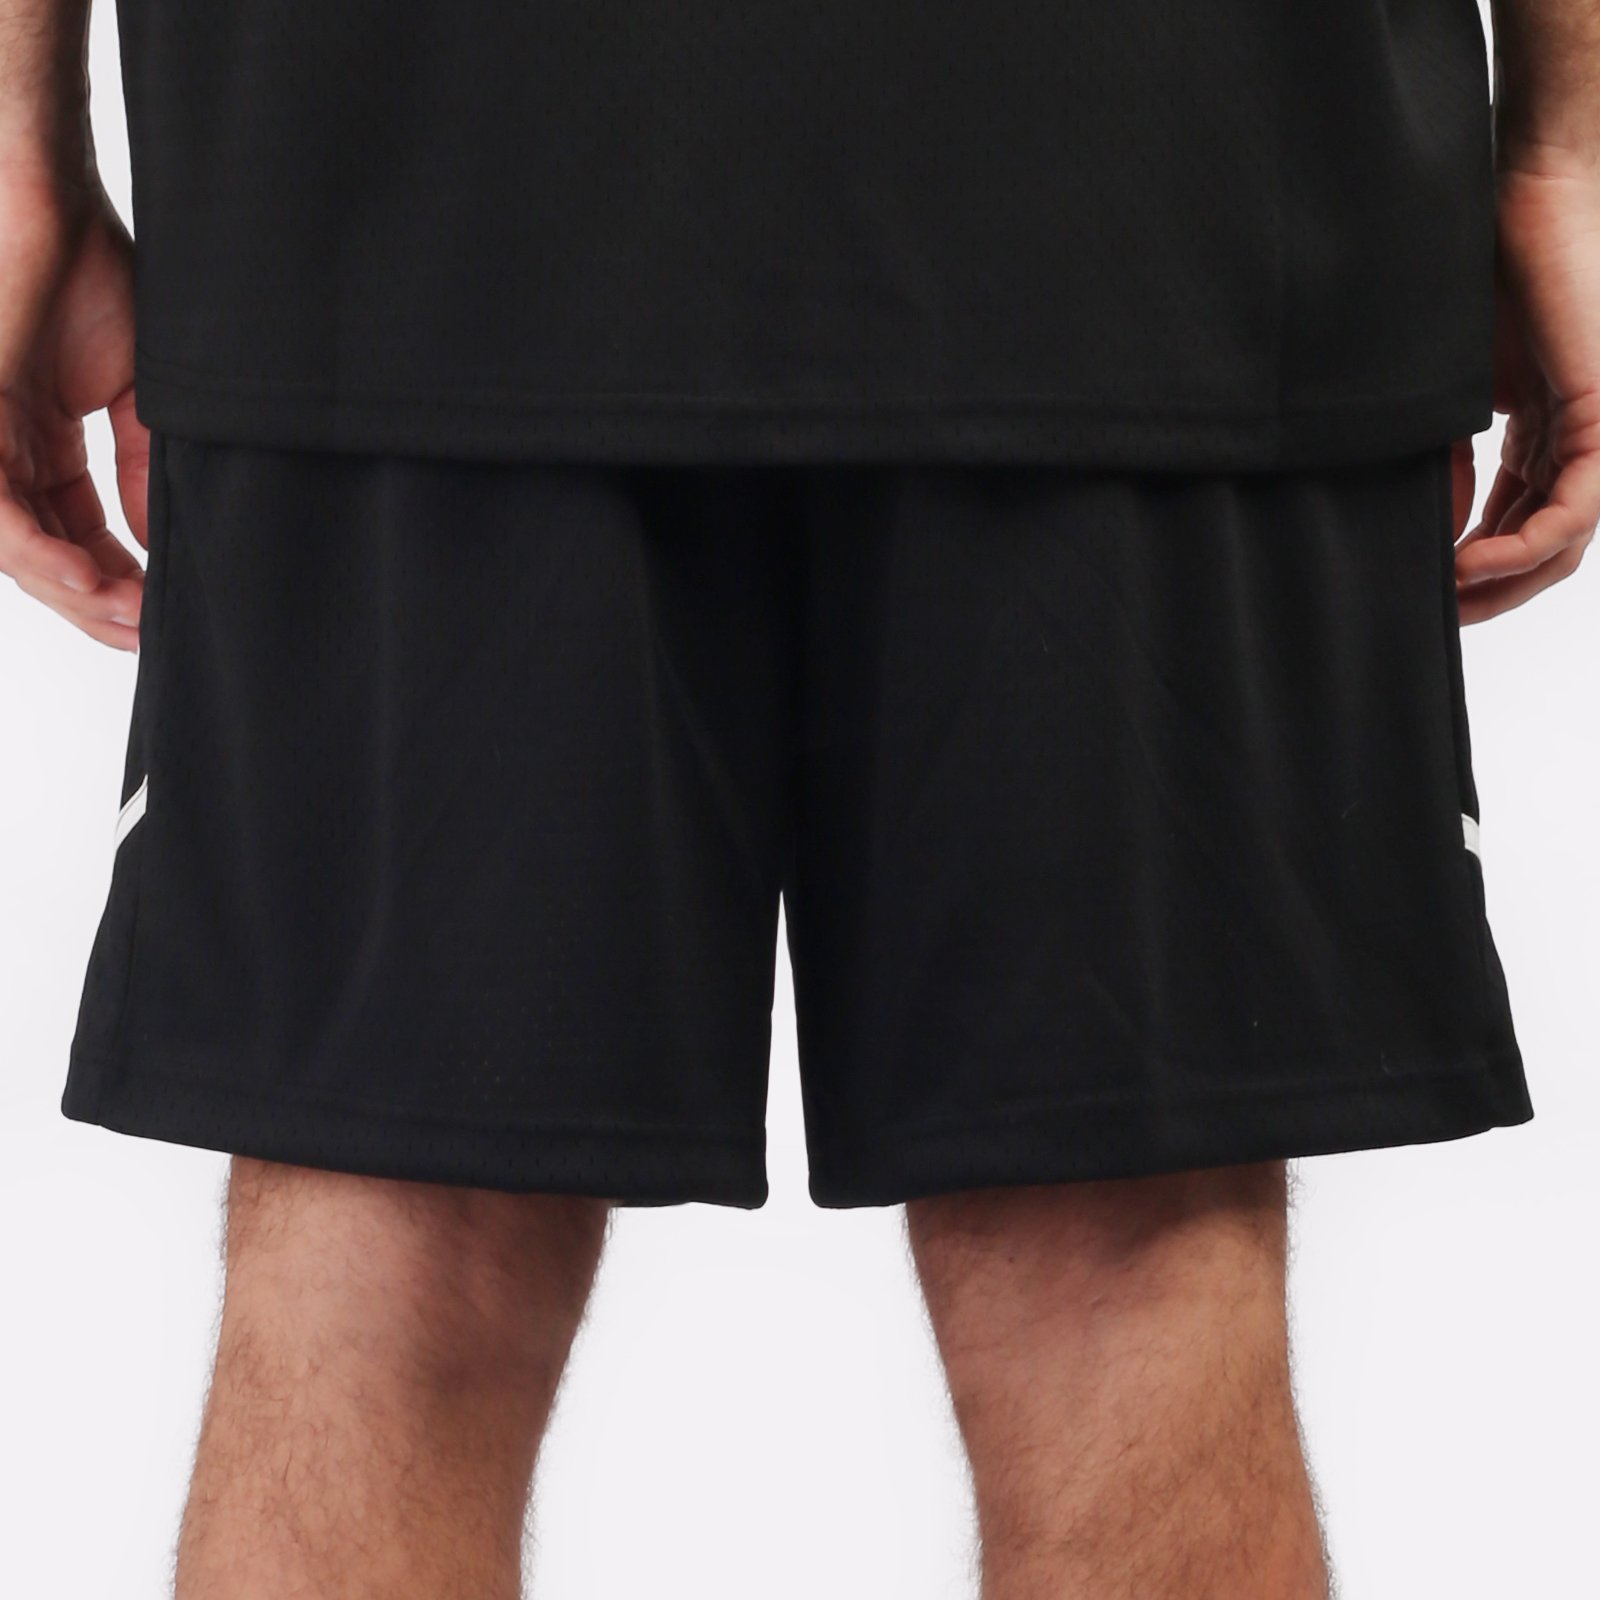 мужские шорты Hard Teammate  (Teammate short-blk/wht)  - цена, описание, фото 2